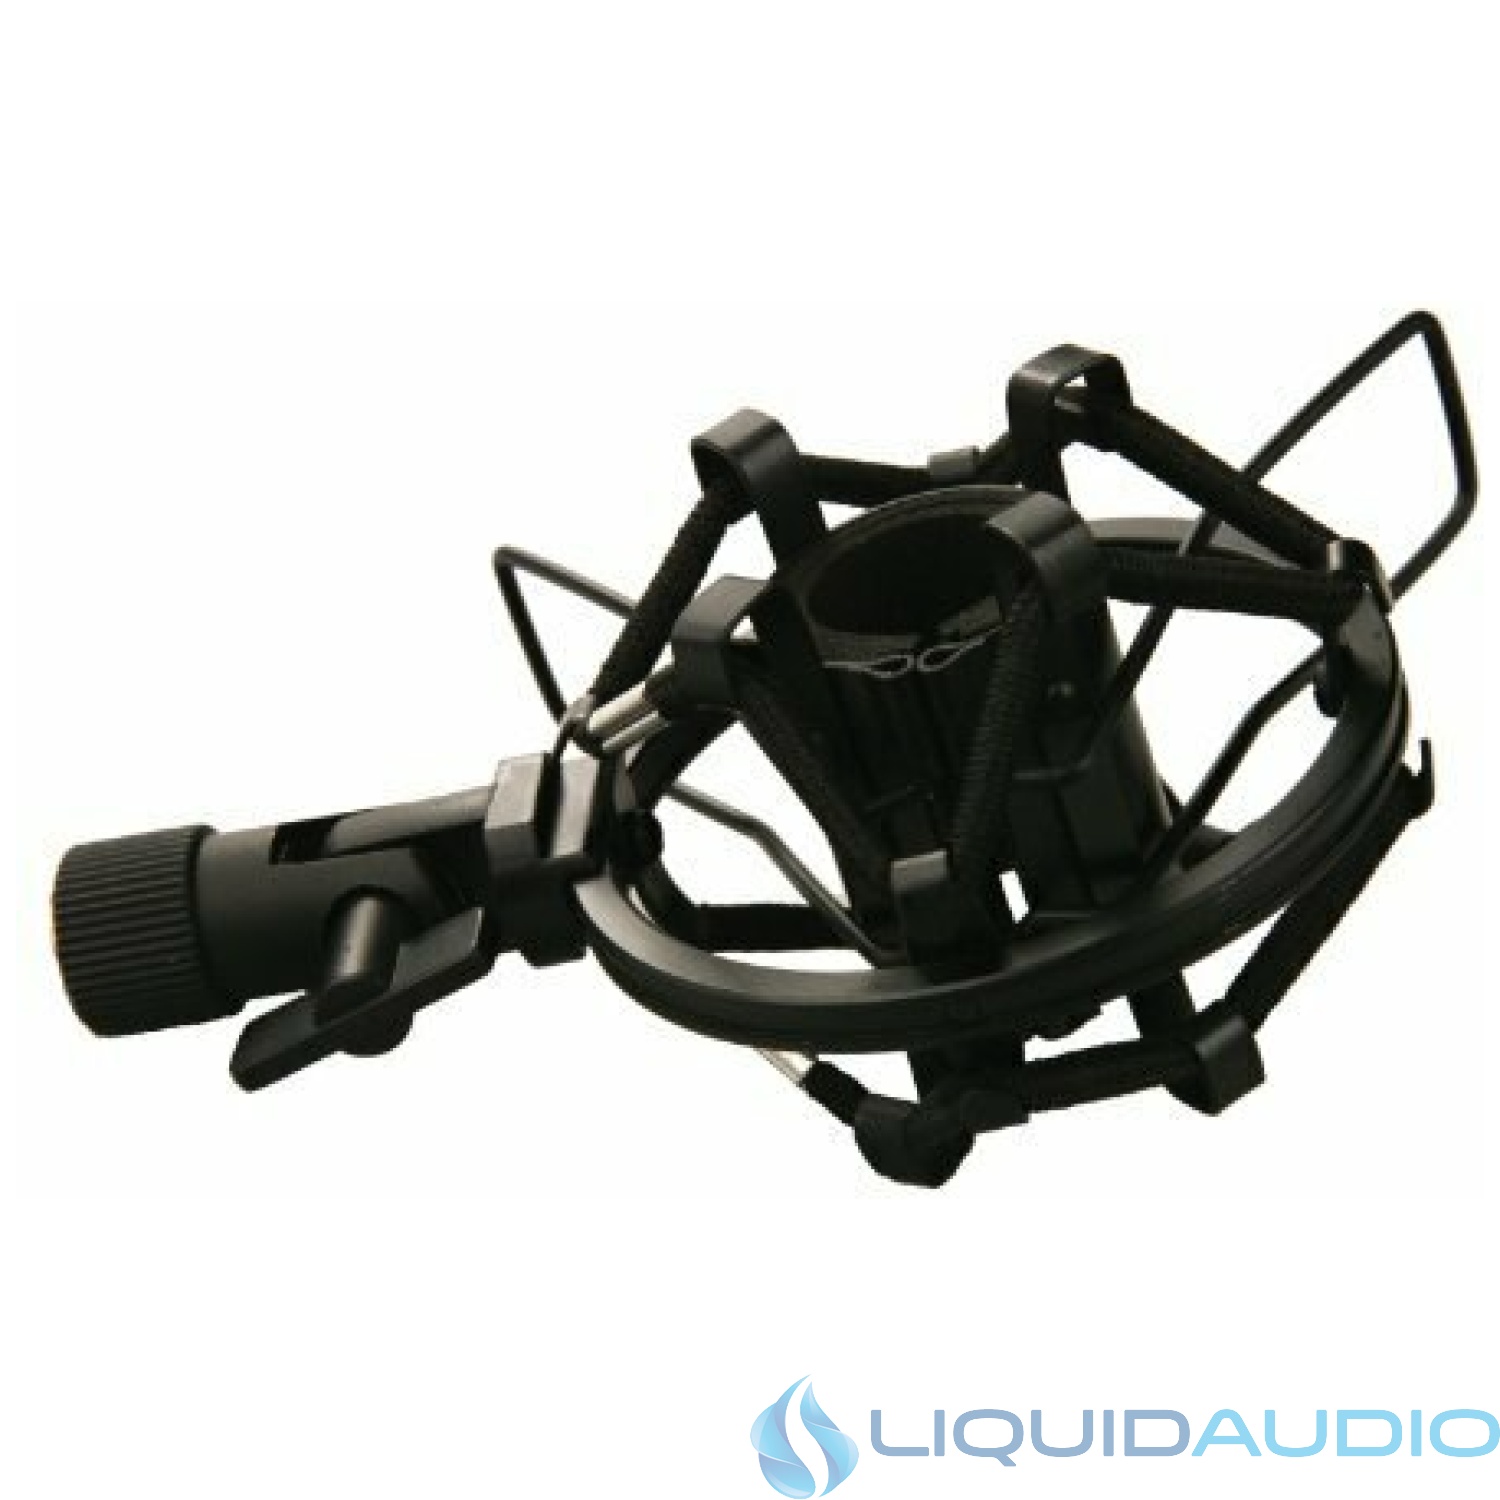 Audix SMT25 Shockmount suspension system for pencil condenser mics.